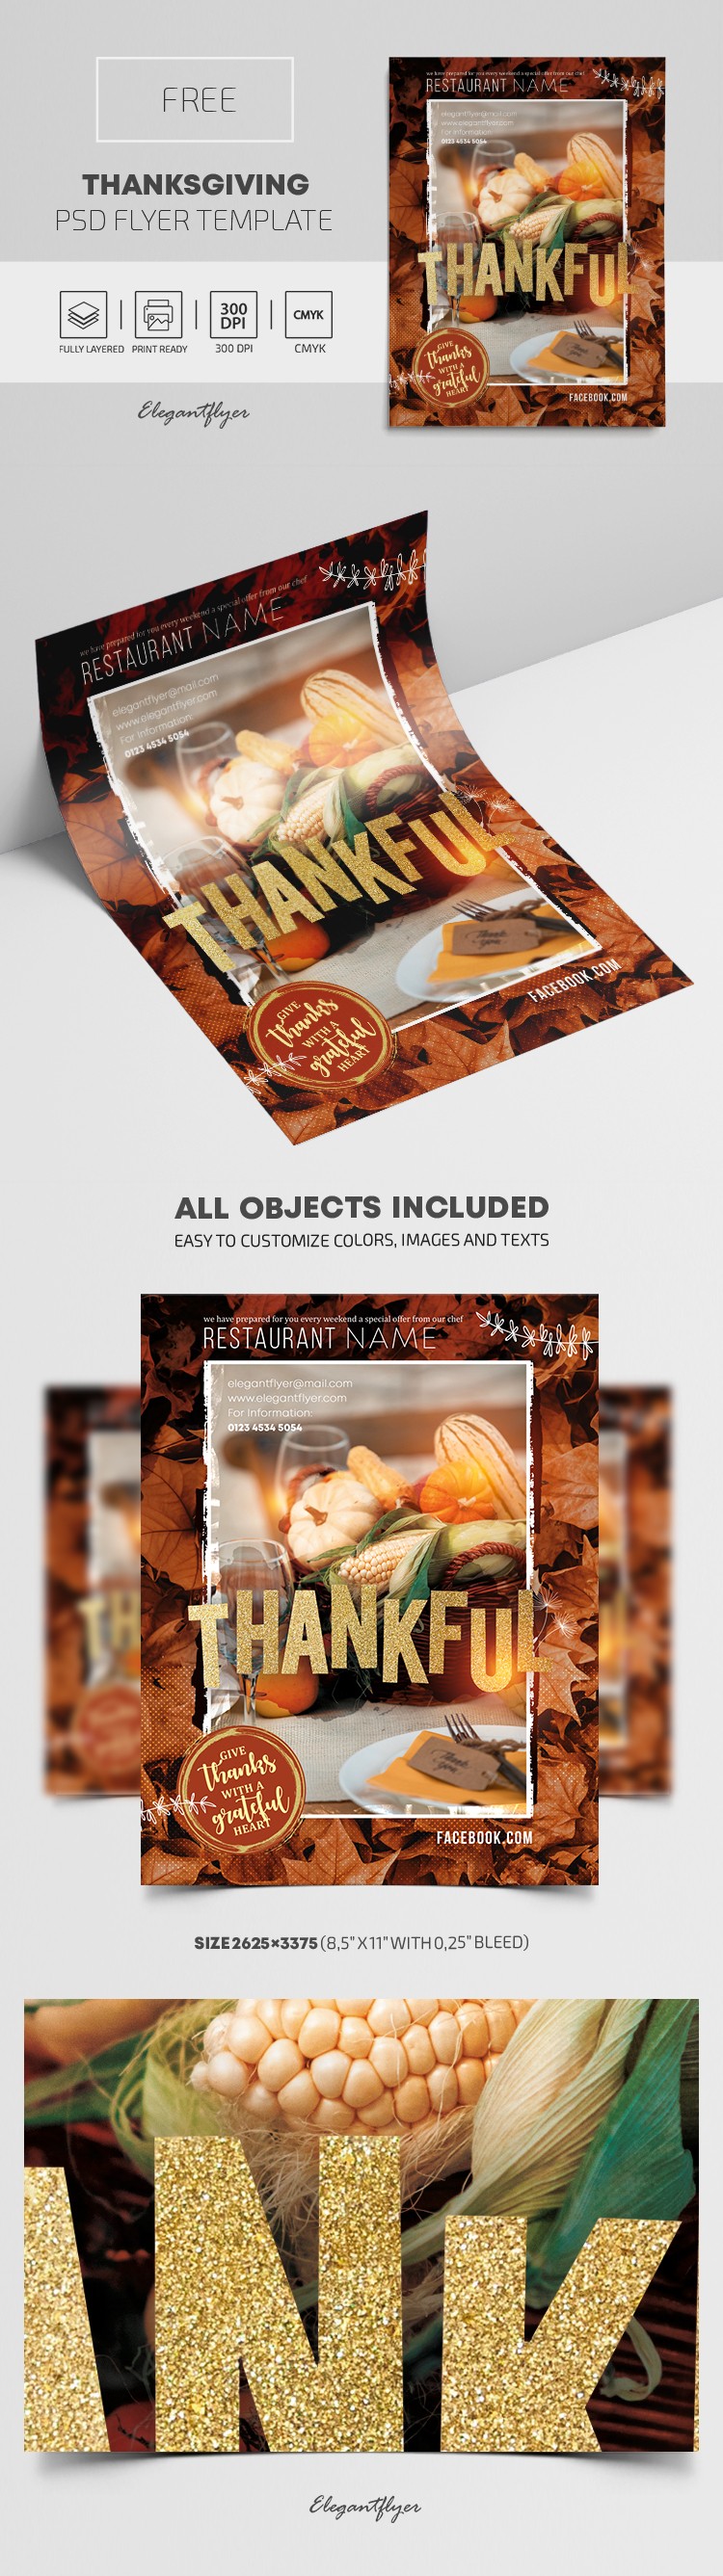 Thanksgiving Flyer by ElegantFlyer